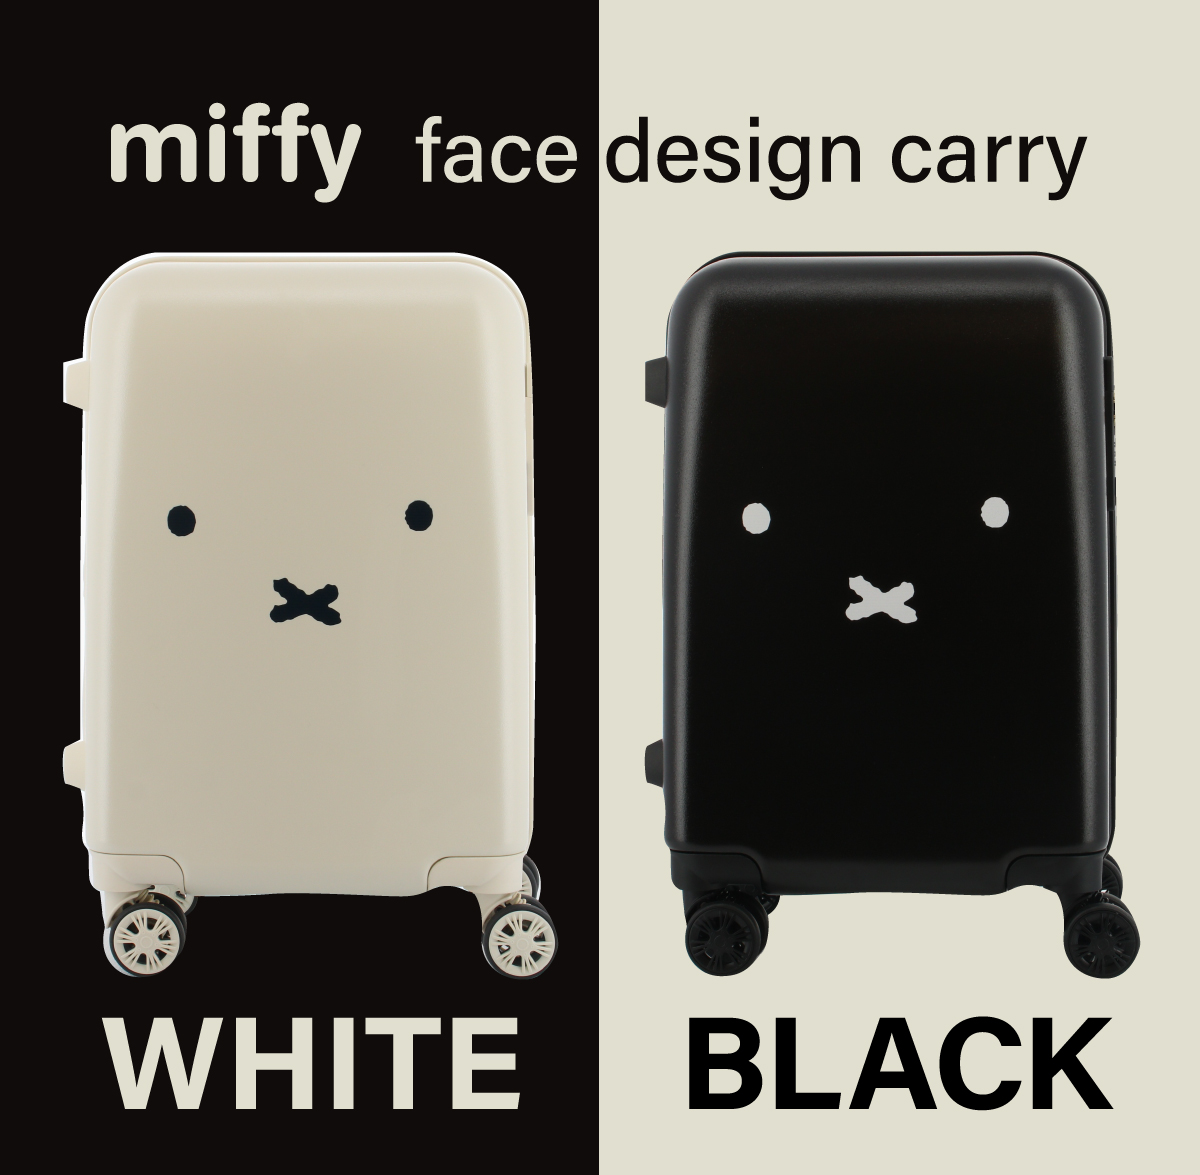 miffyミッフィーのお顔がキュートなフェイスデザインキャリーバッグ新登場♪ - SAC'S BAR